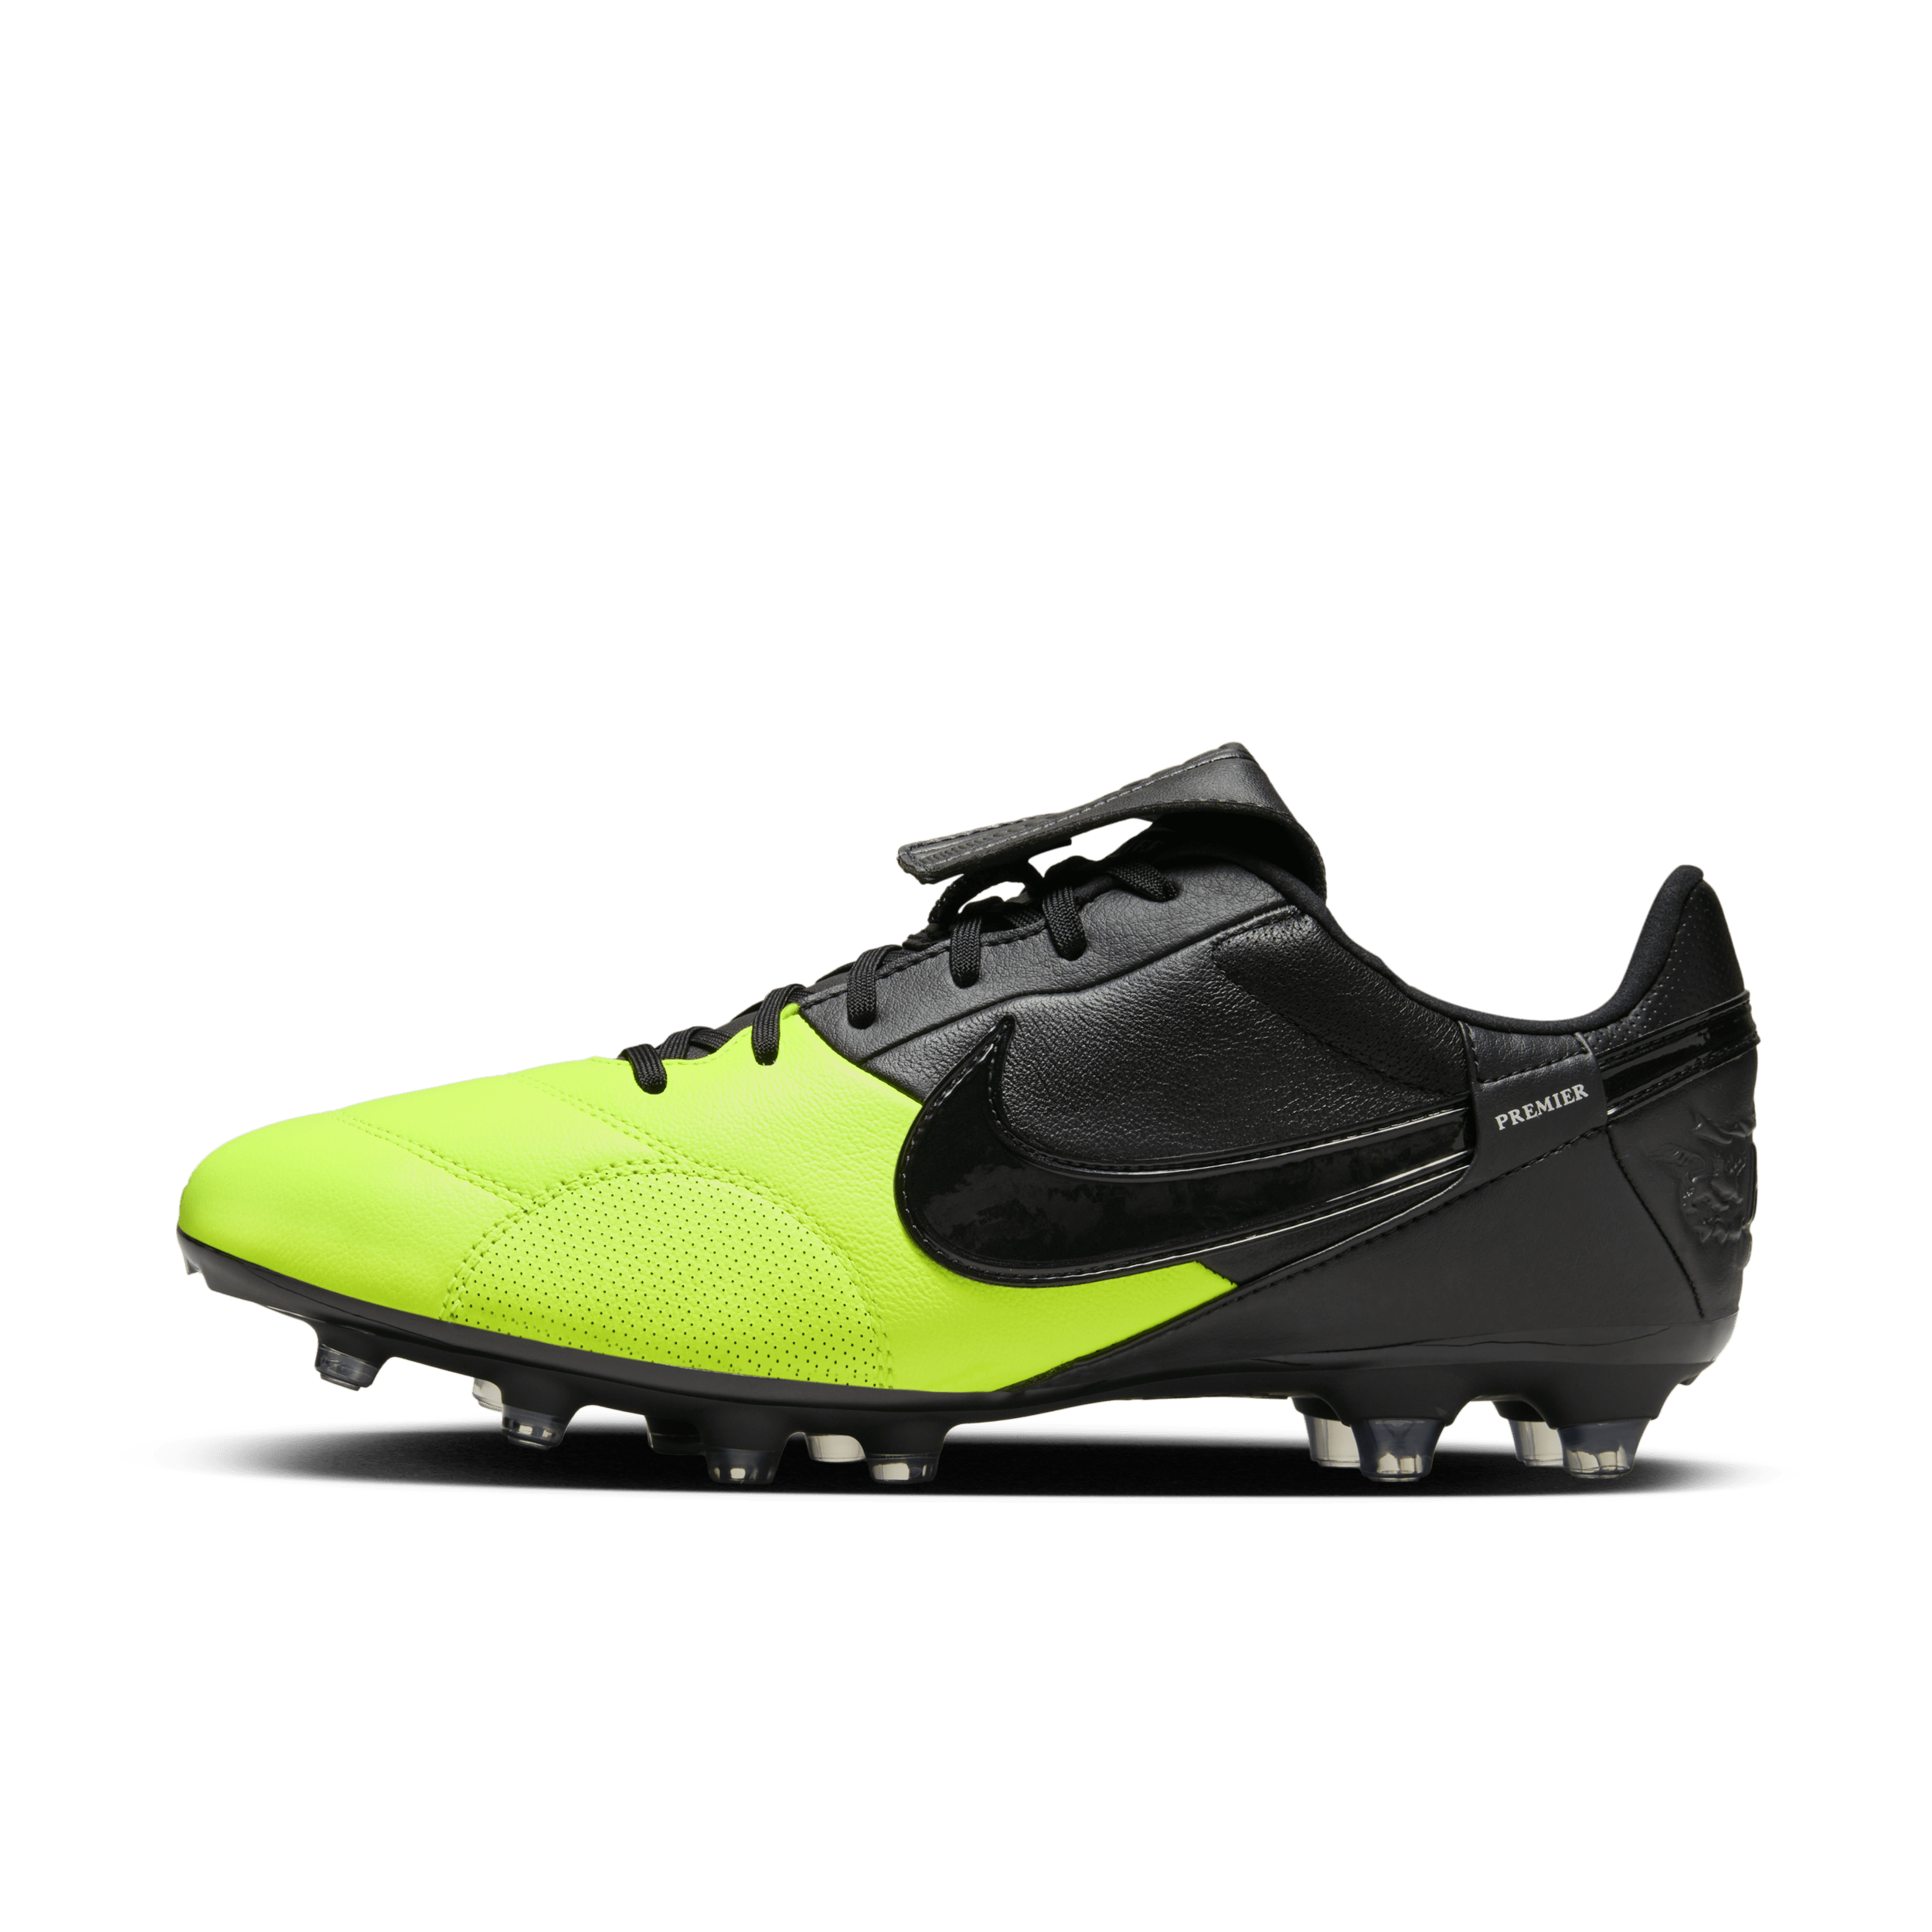 NikePremier 3 voetbalschoen (stevige ondergrond) - Zwart